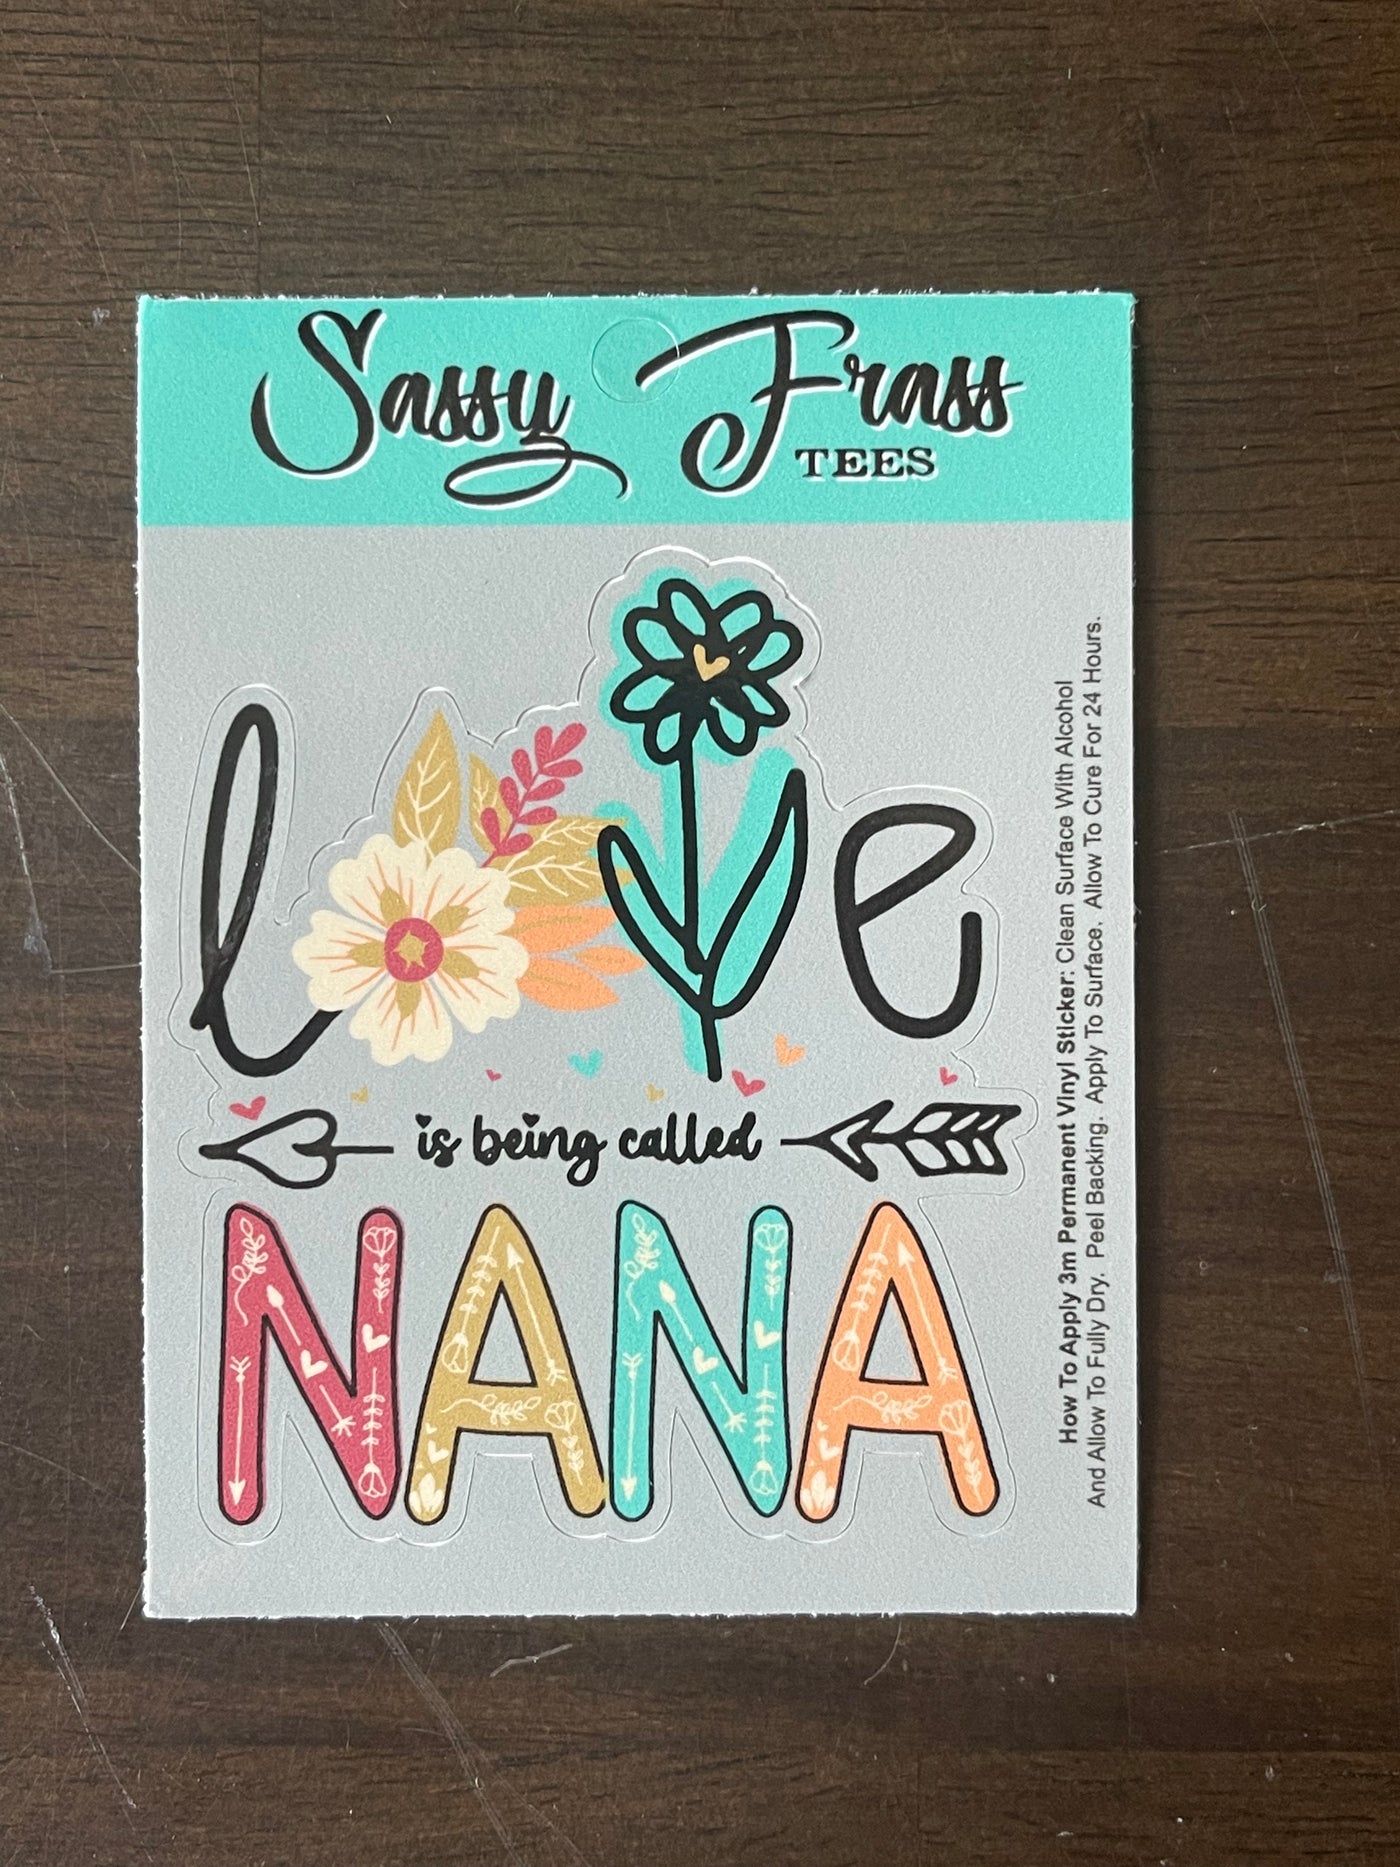 Sassy Frass Stickers